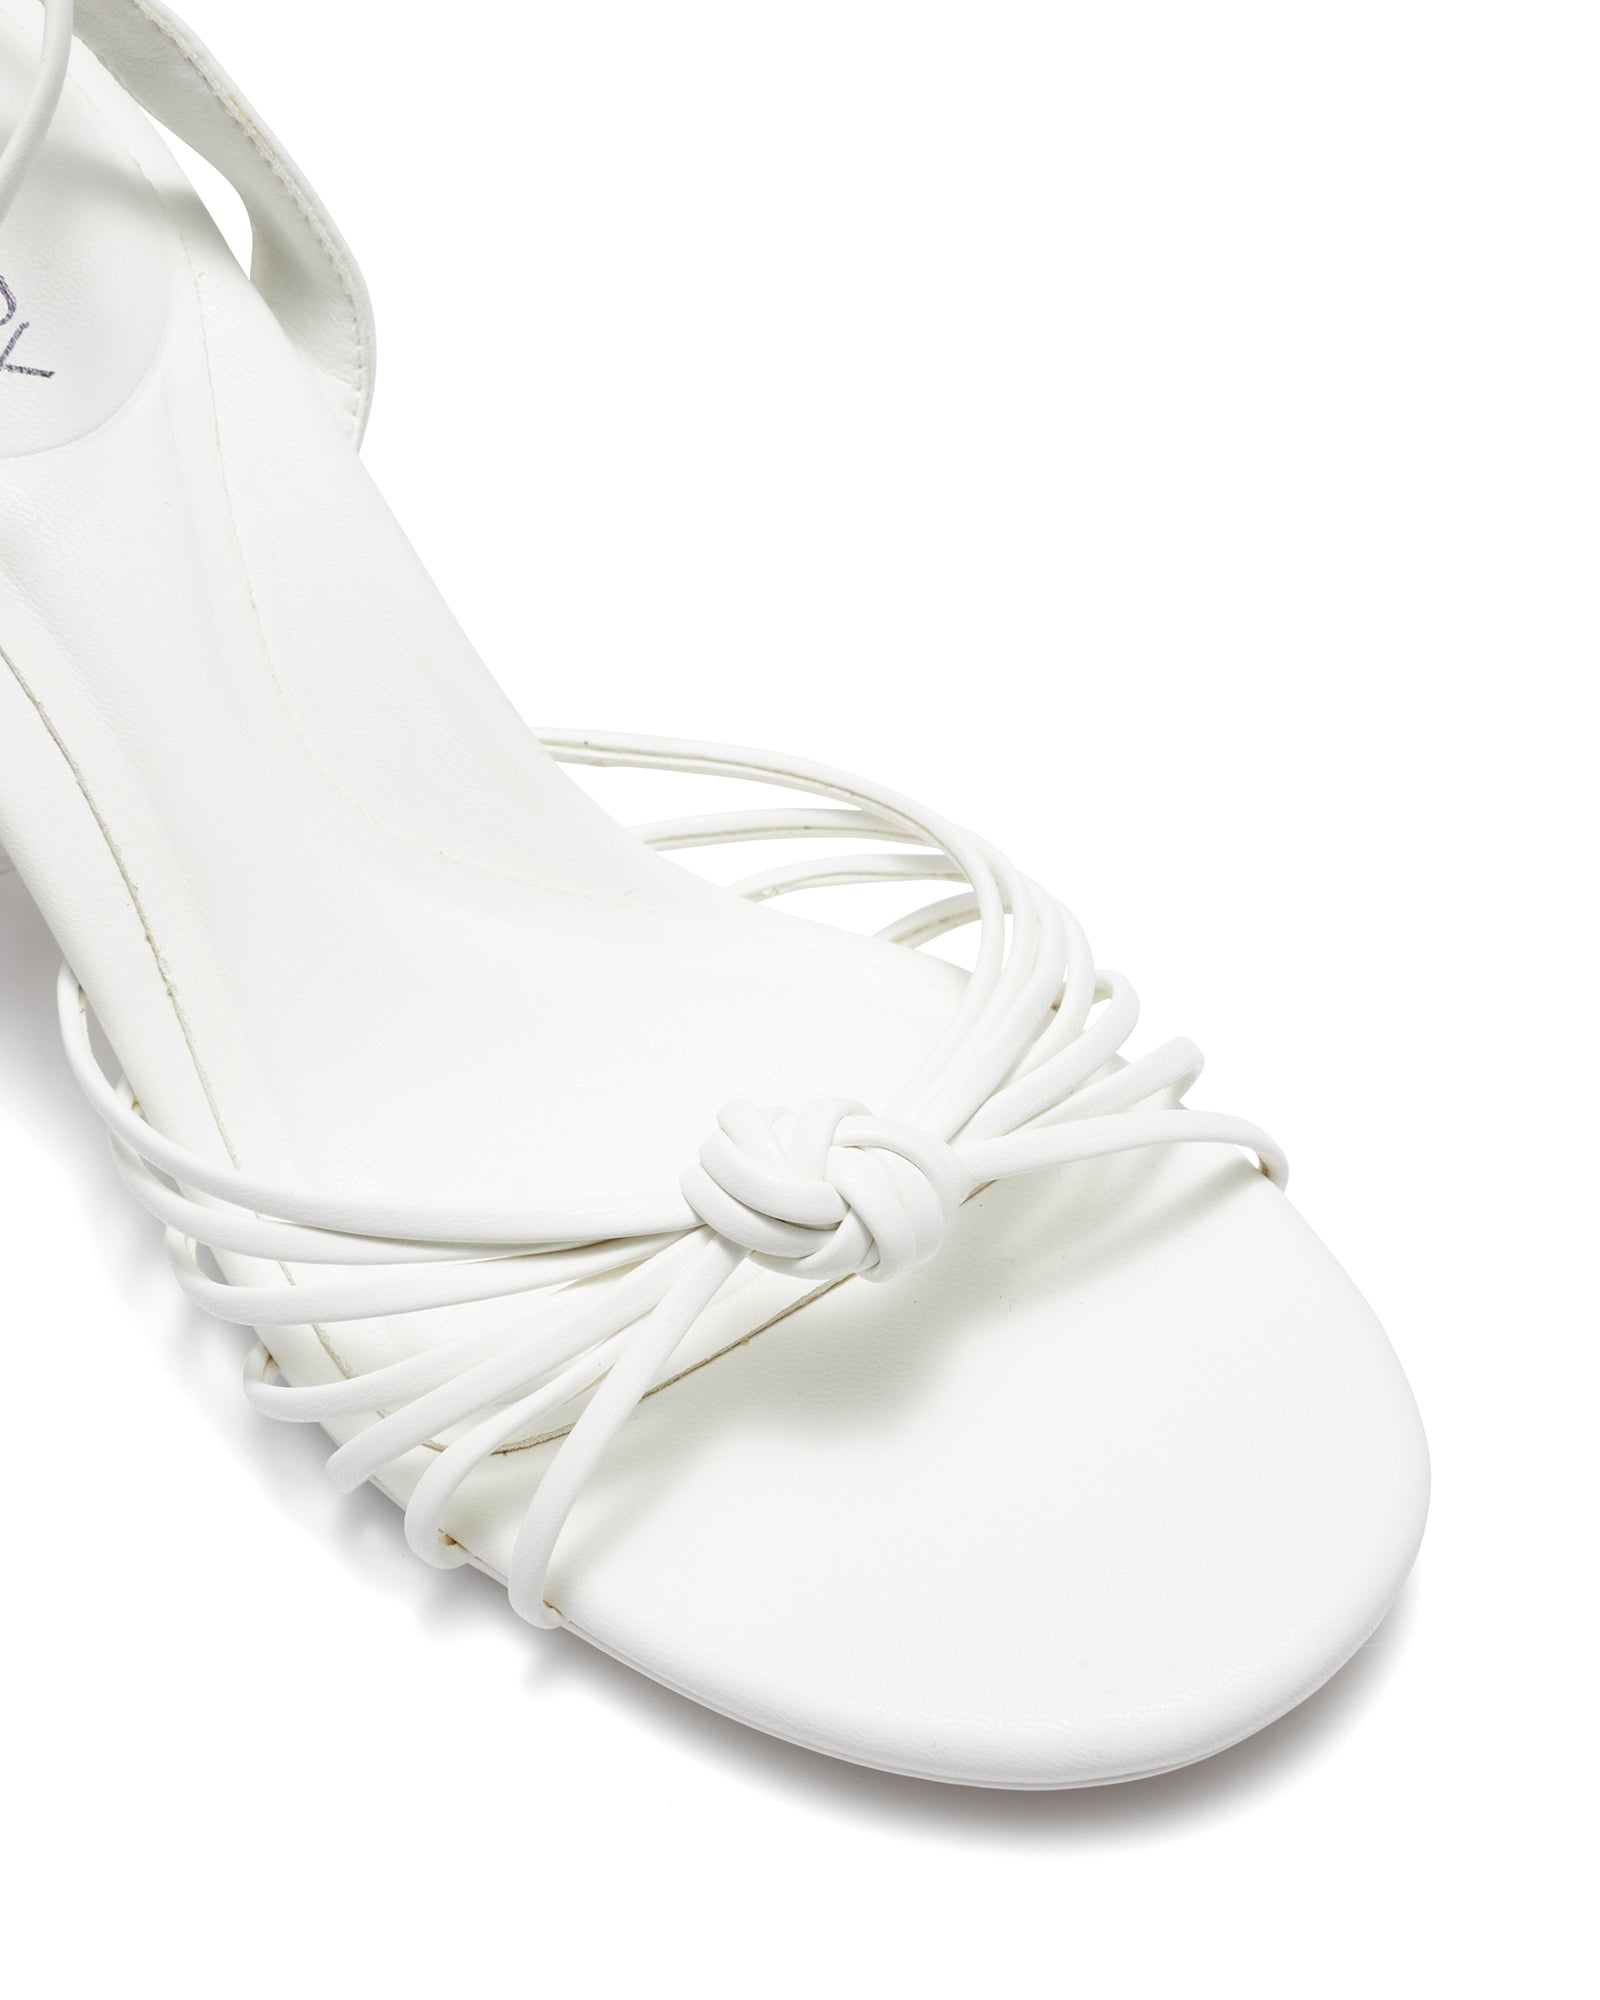 Therapy Shoes Lavish White | Women's Heels | Sandals | Stiletto | Tie Up 